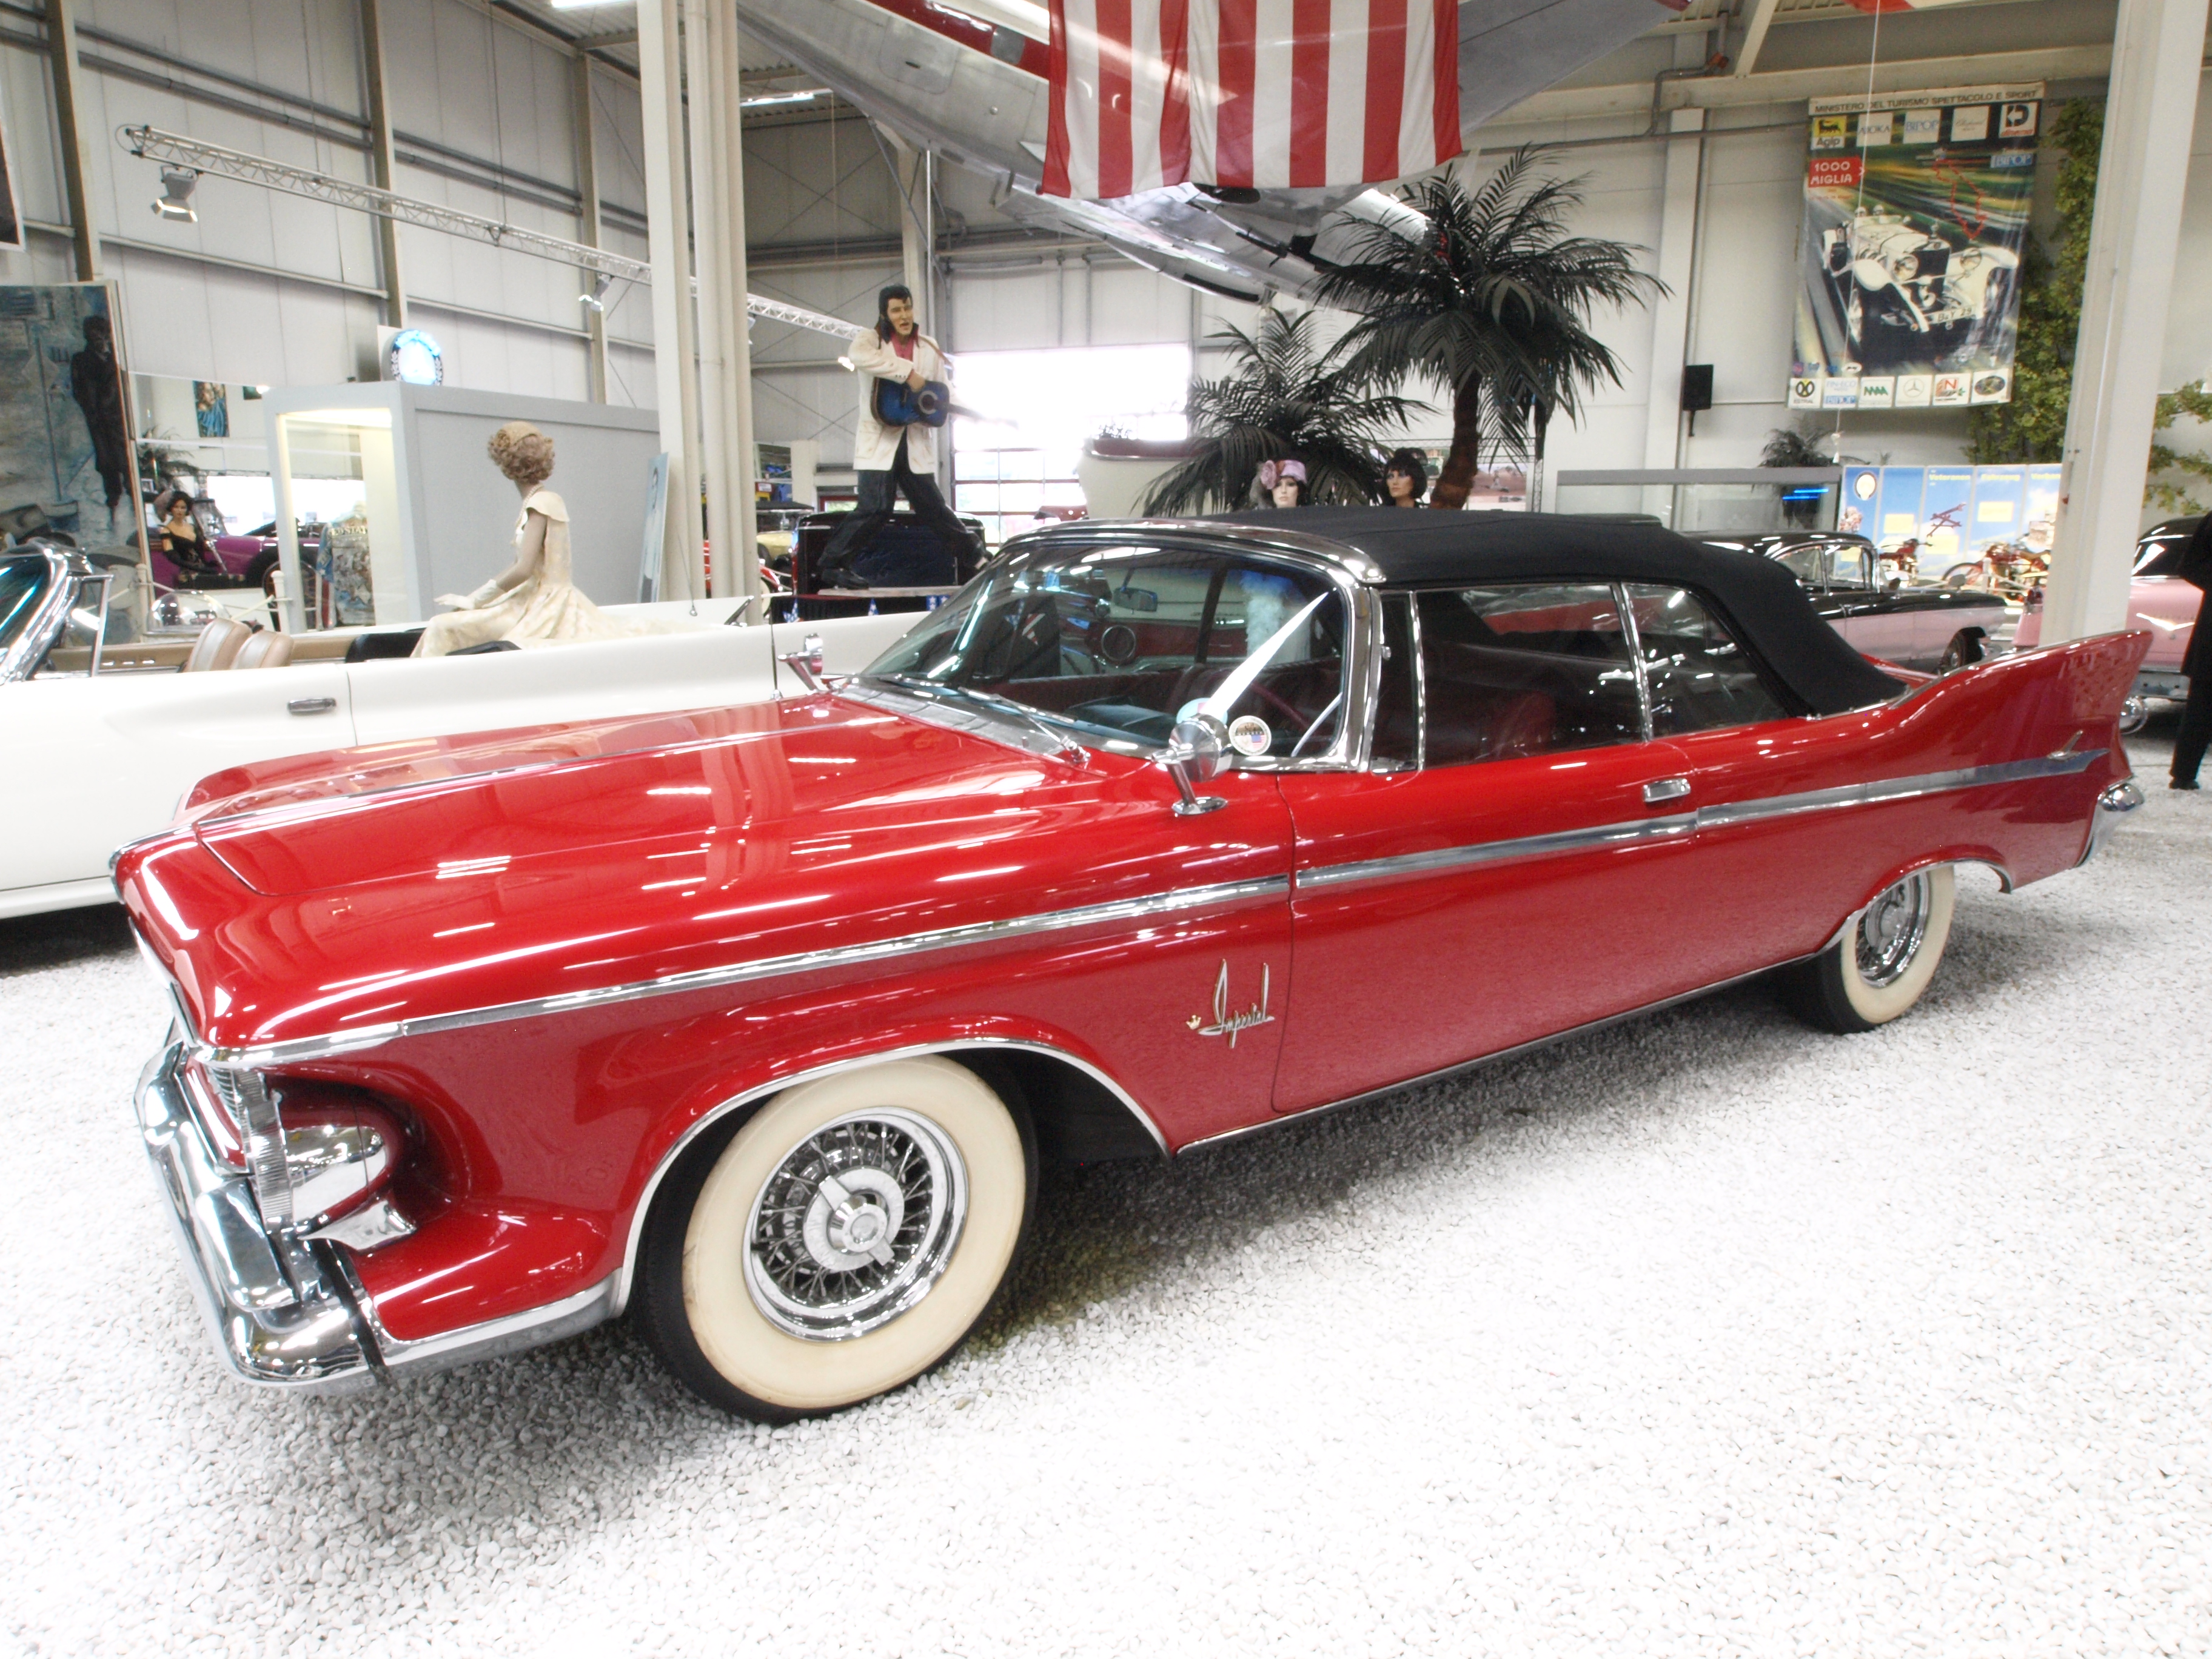 File:Chrysler Imperial Crown Southampton pic2.JPG - Wikimedia Commons